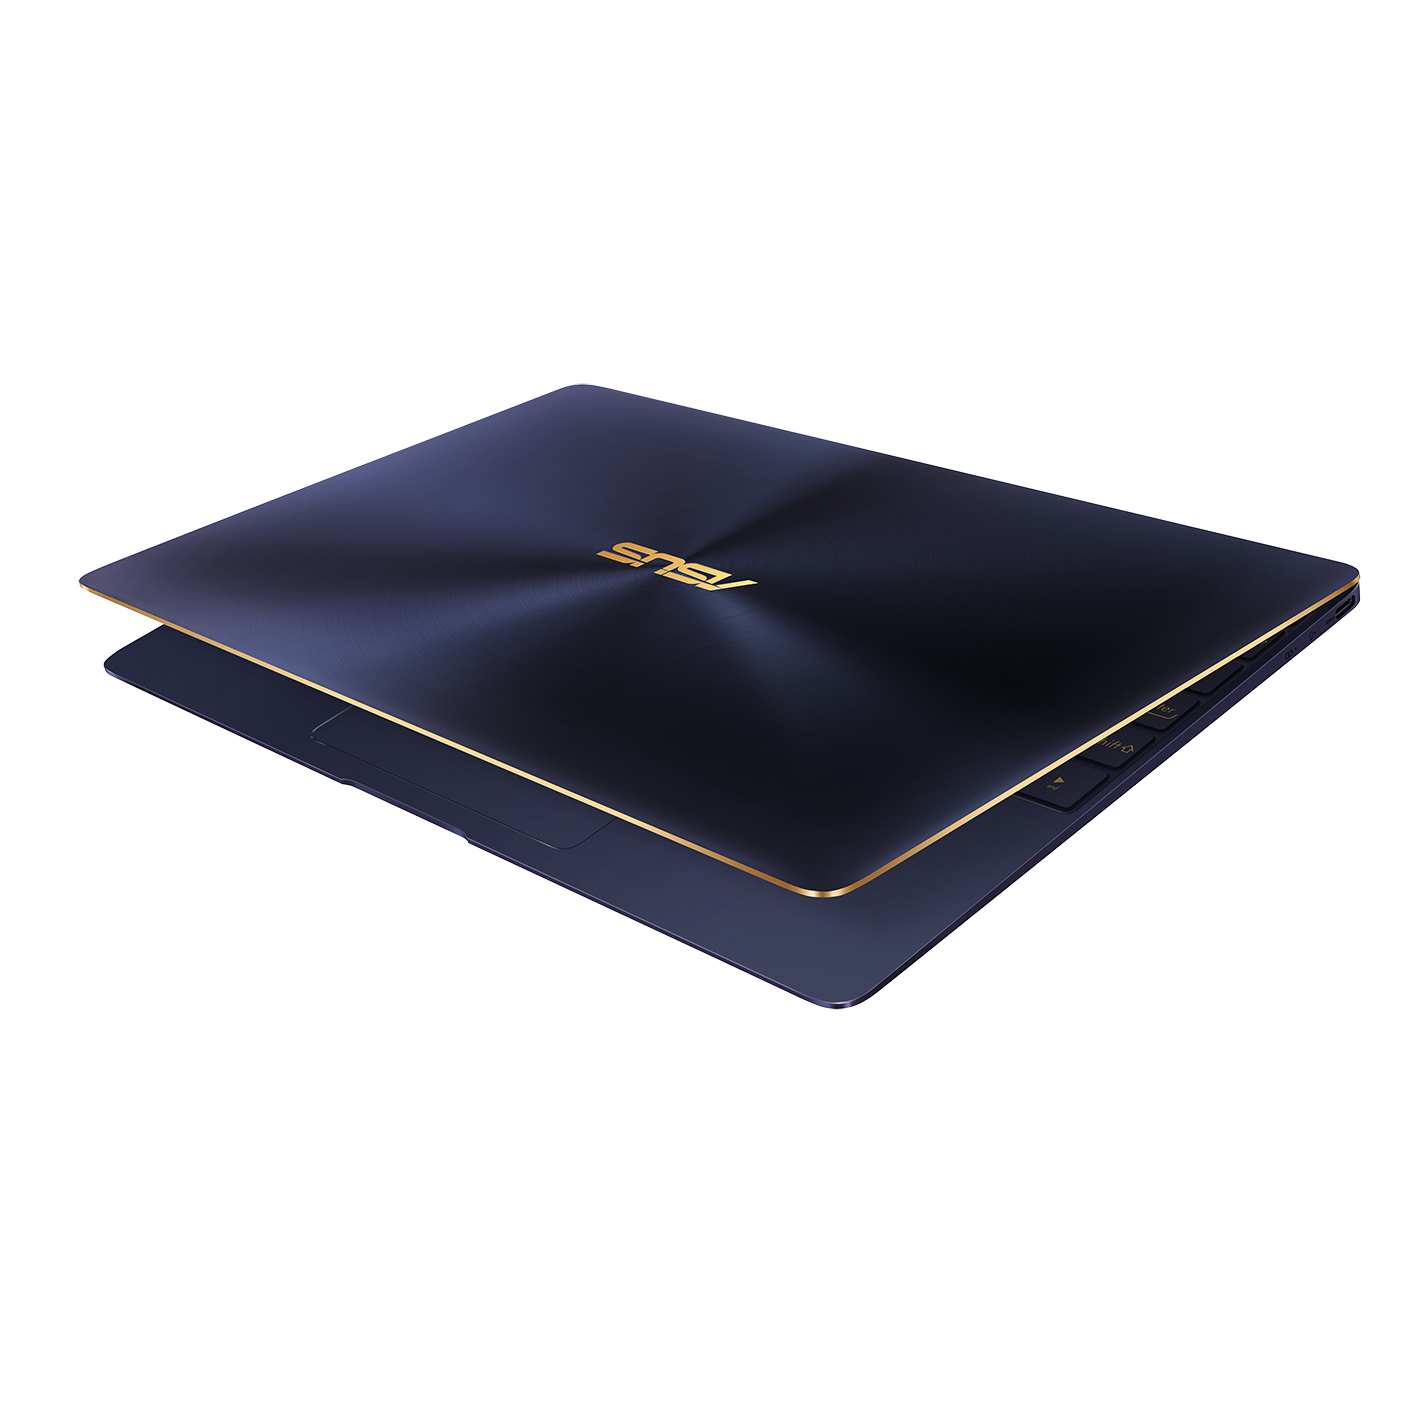 ASUS ZenBook 3 with Windows 10